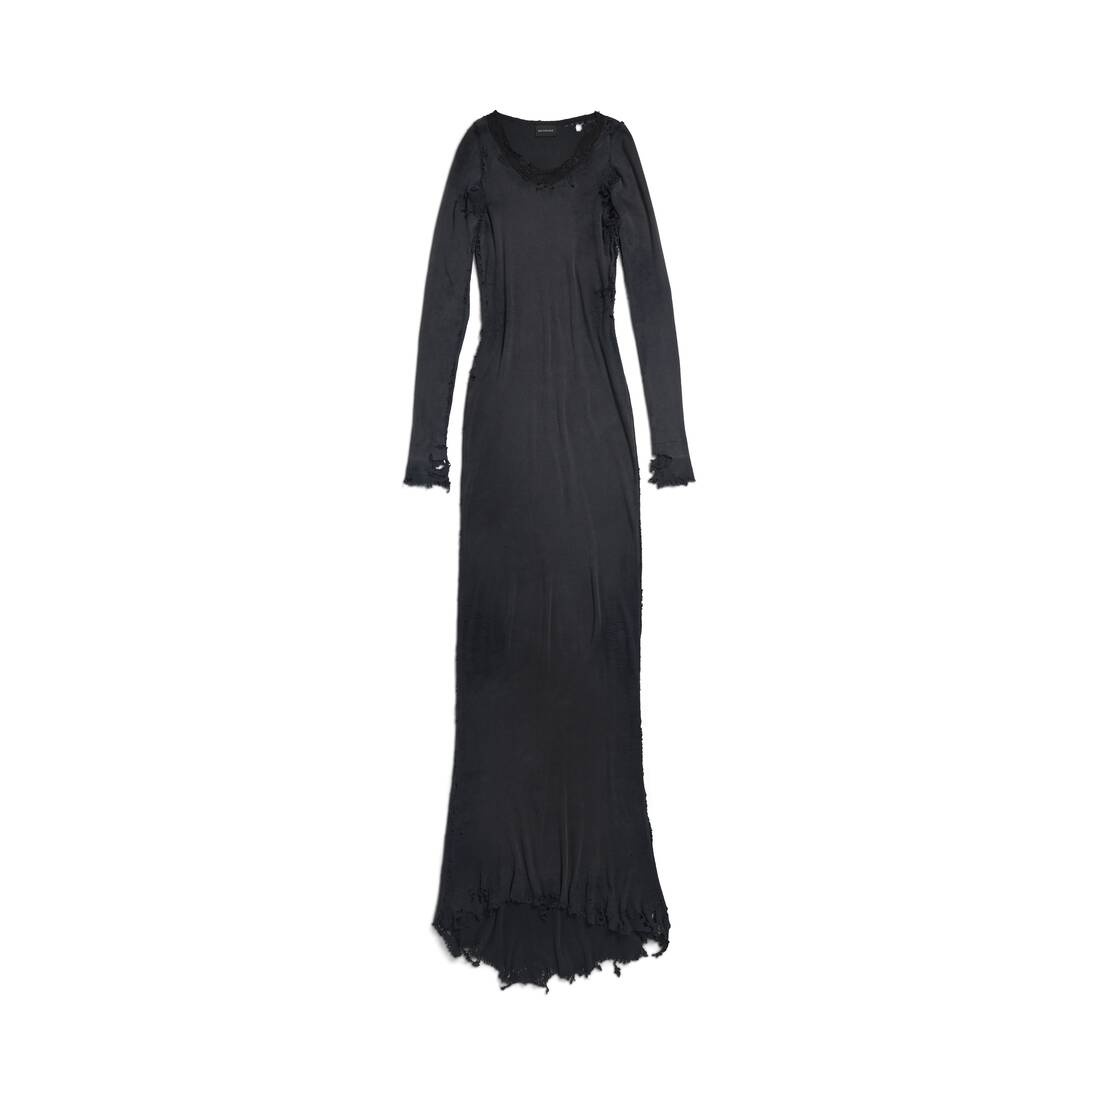 Women's Lingerie Maxi Dress in Black - 1